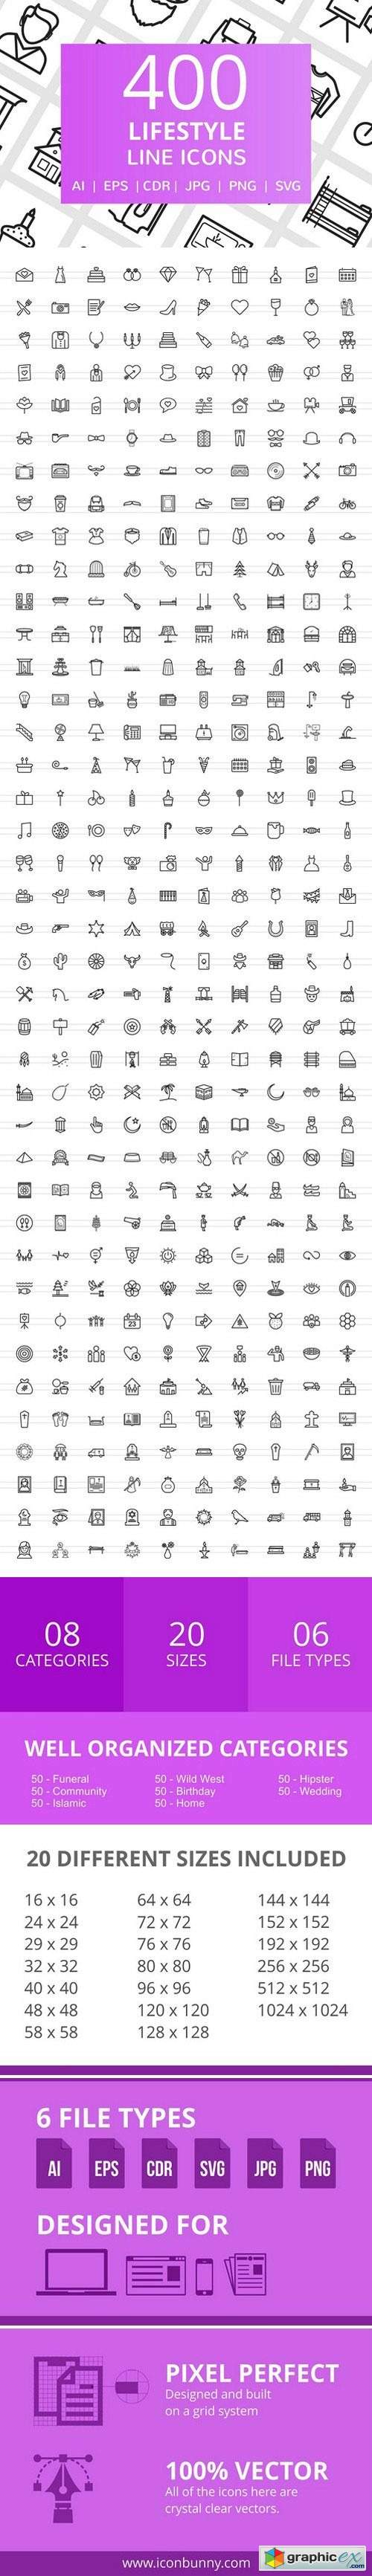 400 Lifestyle Line Icons